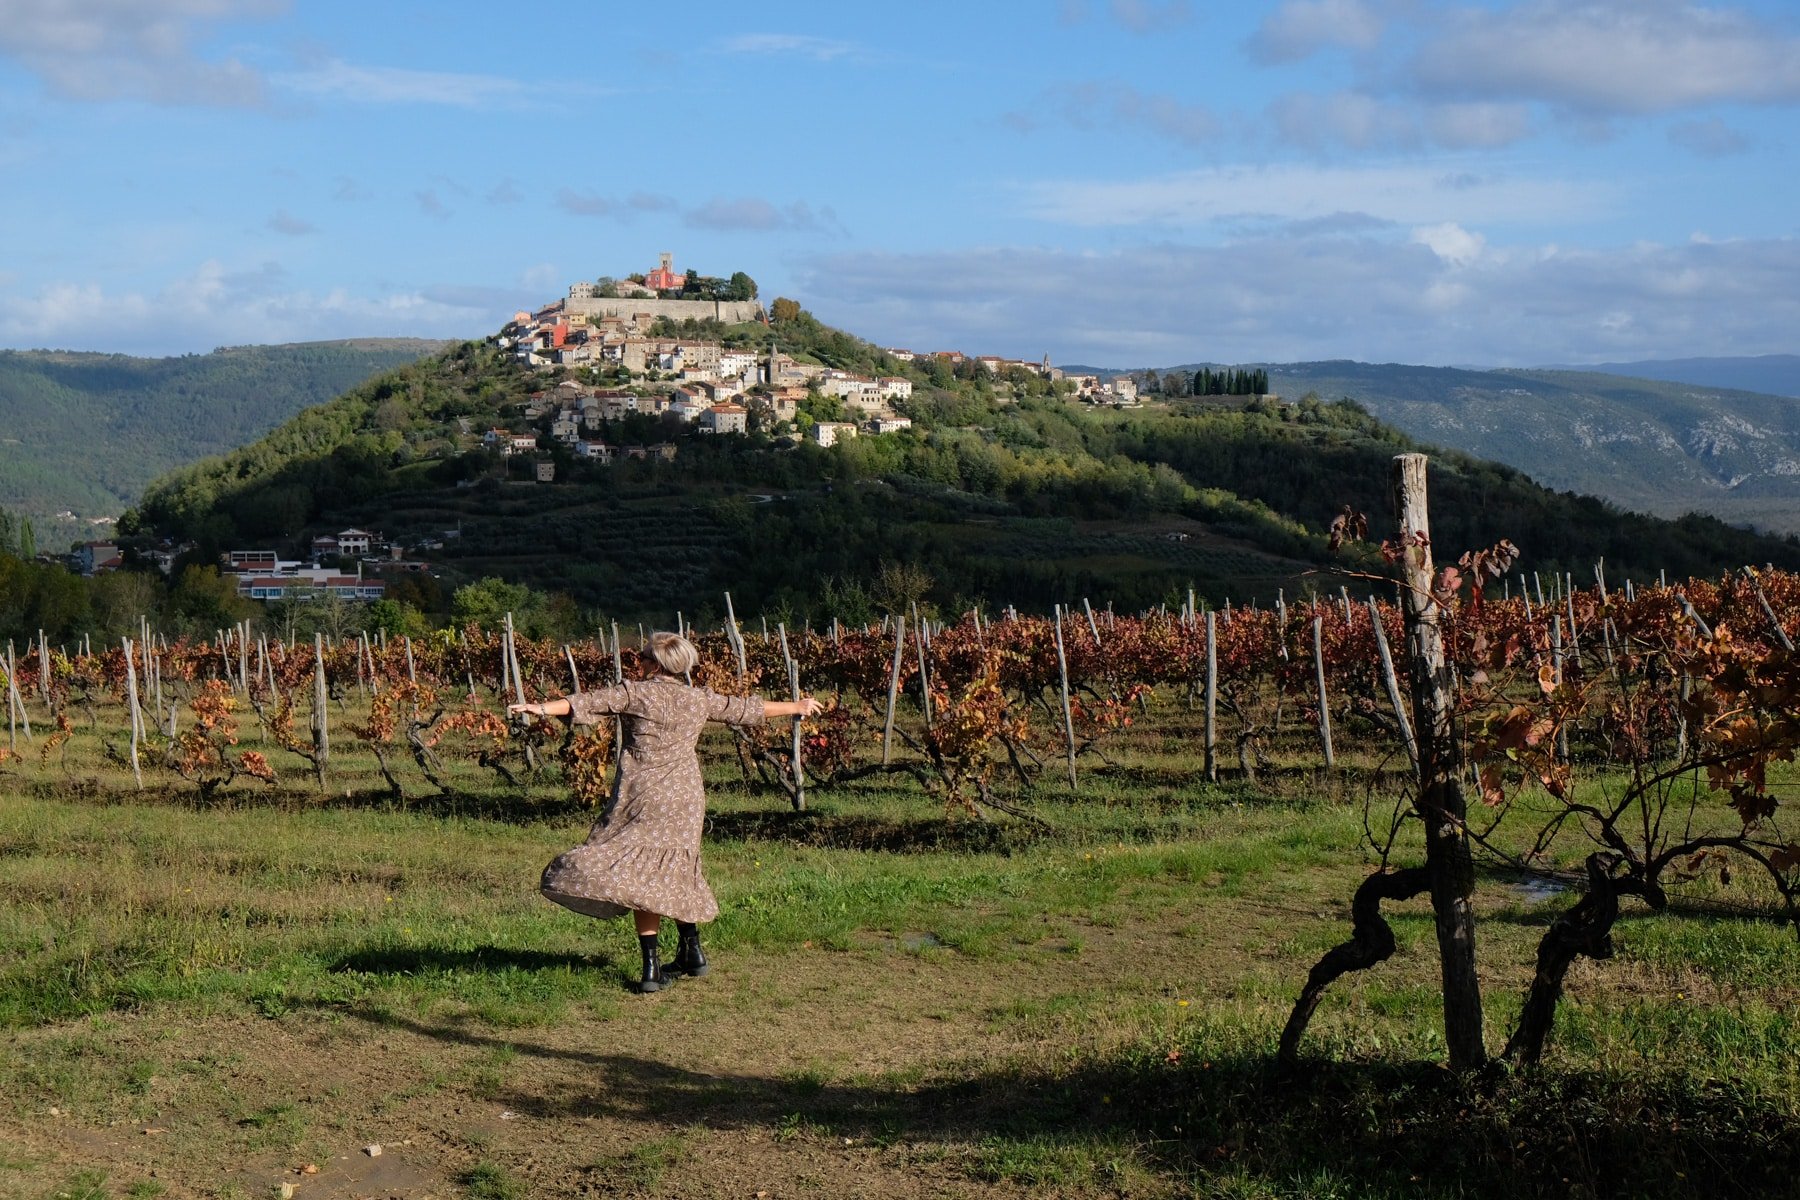 Sj running in the beautiful vineyards of Istria.